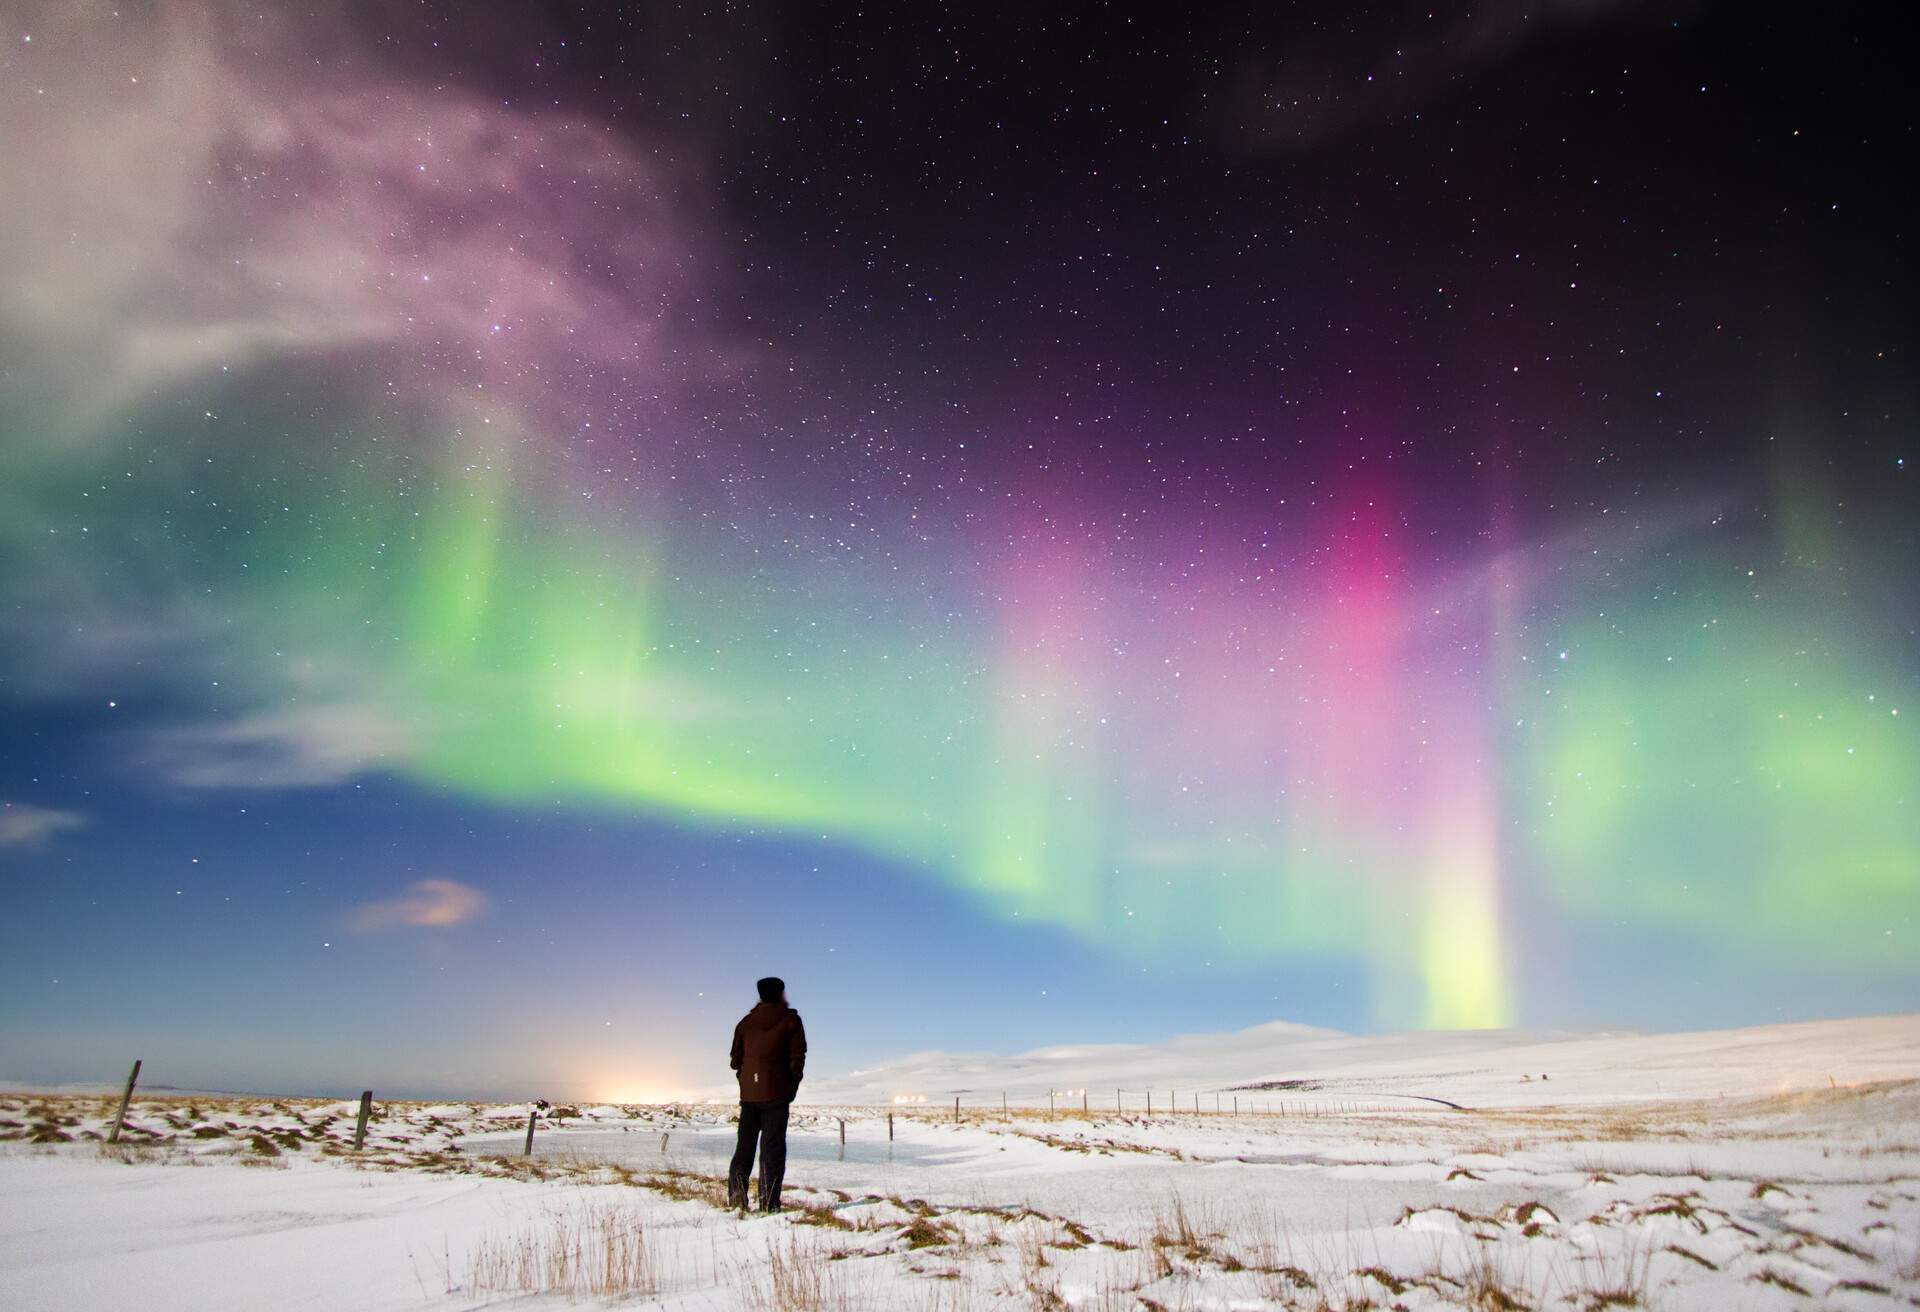 ICELAND_THEME_WINTER_AURORA-BOREALIS_NORTHERN-LIGHTS